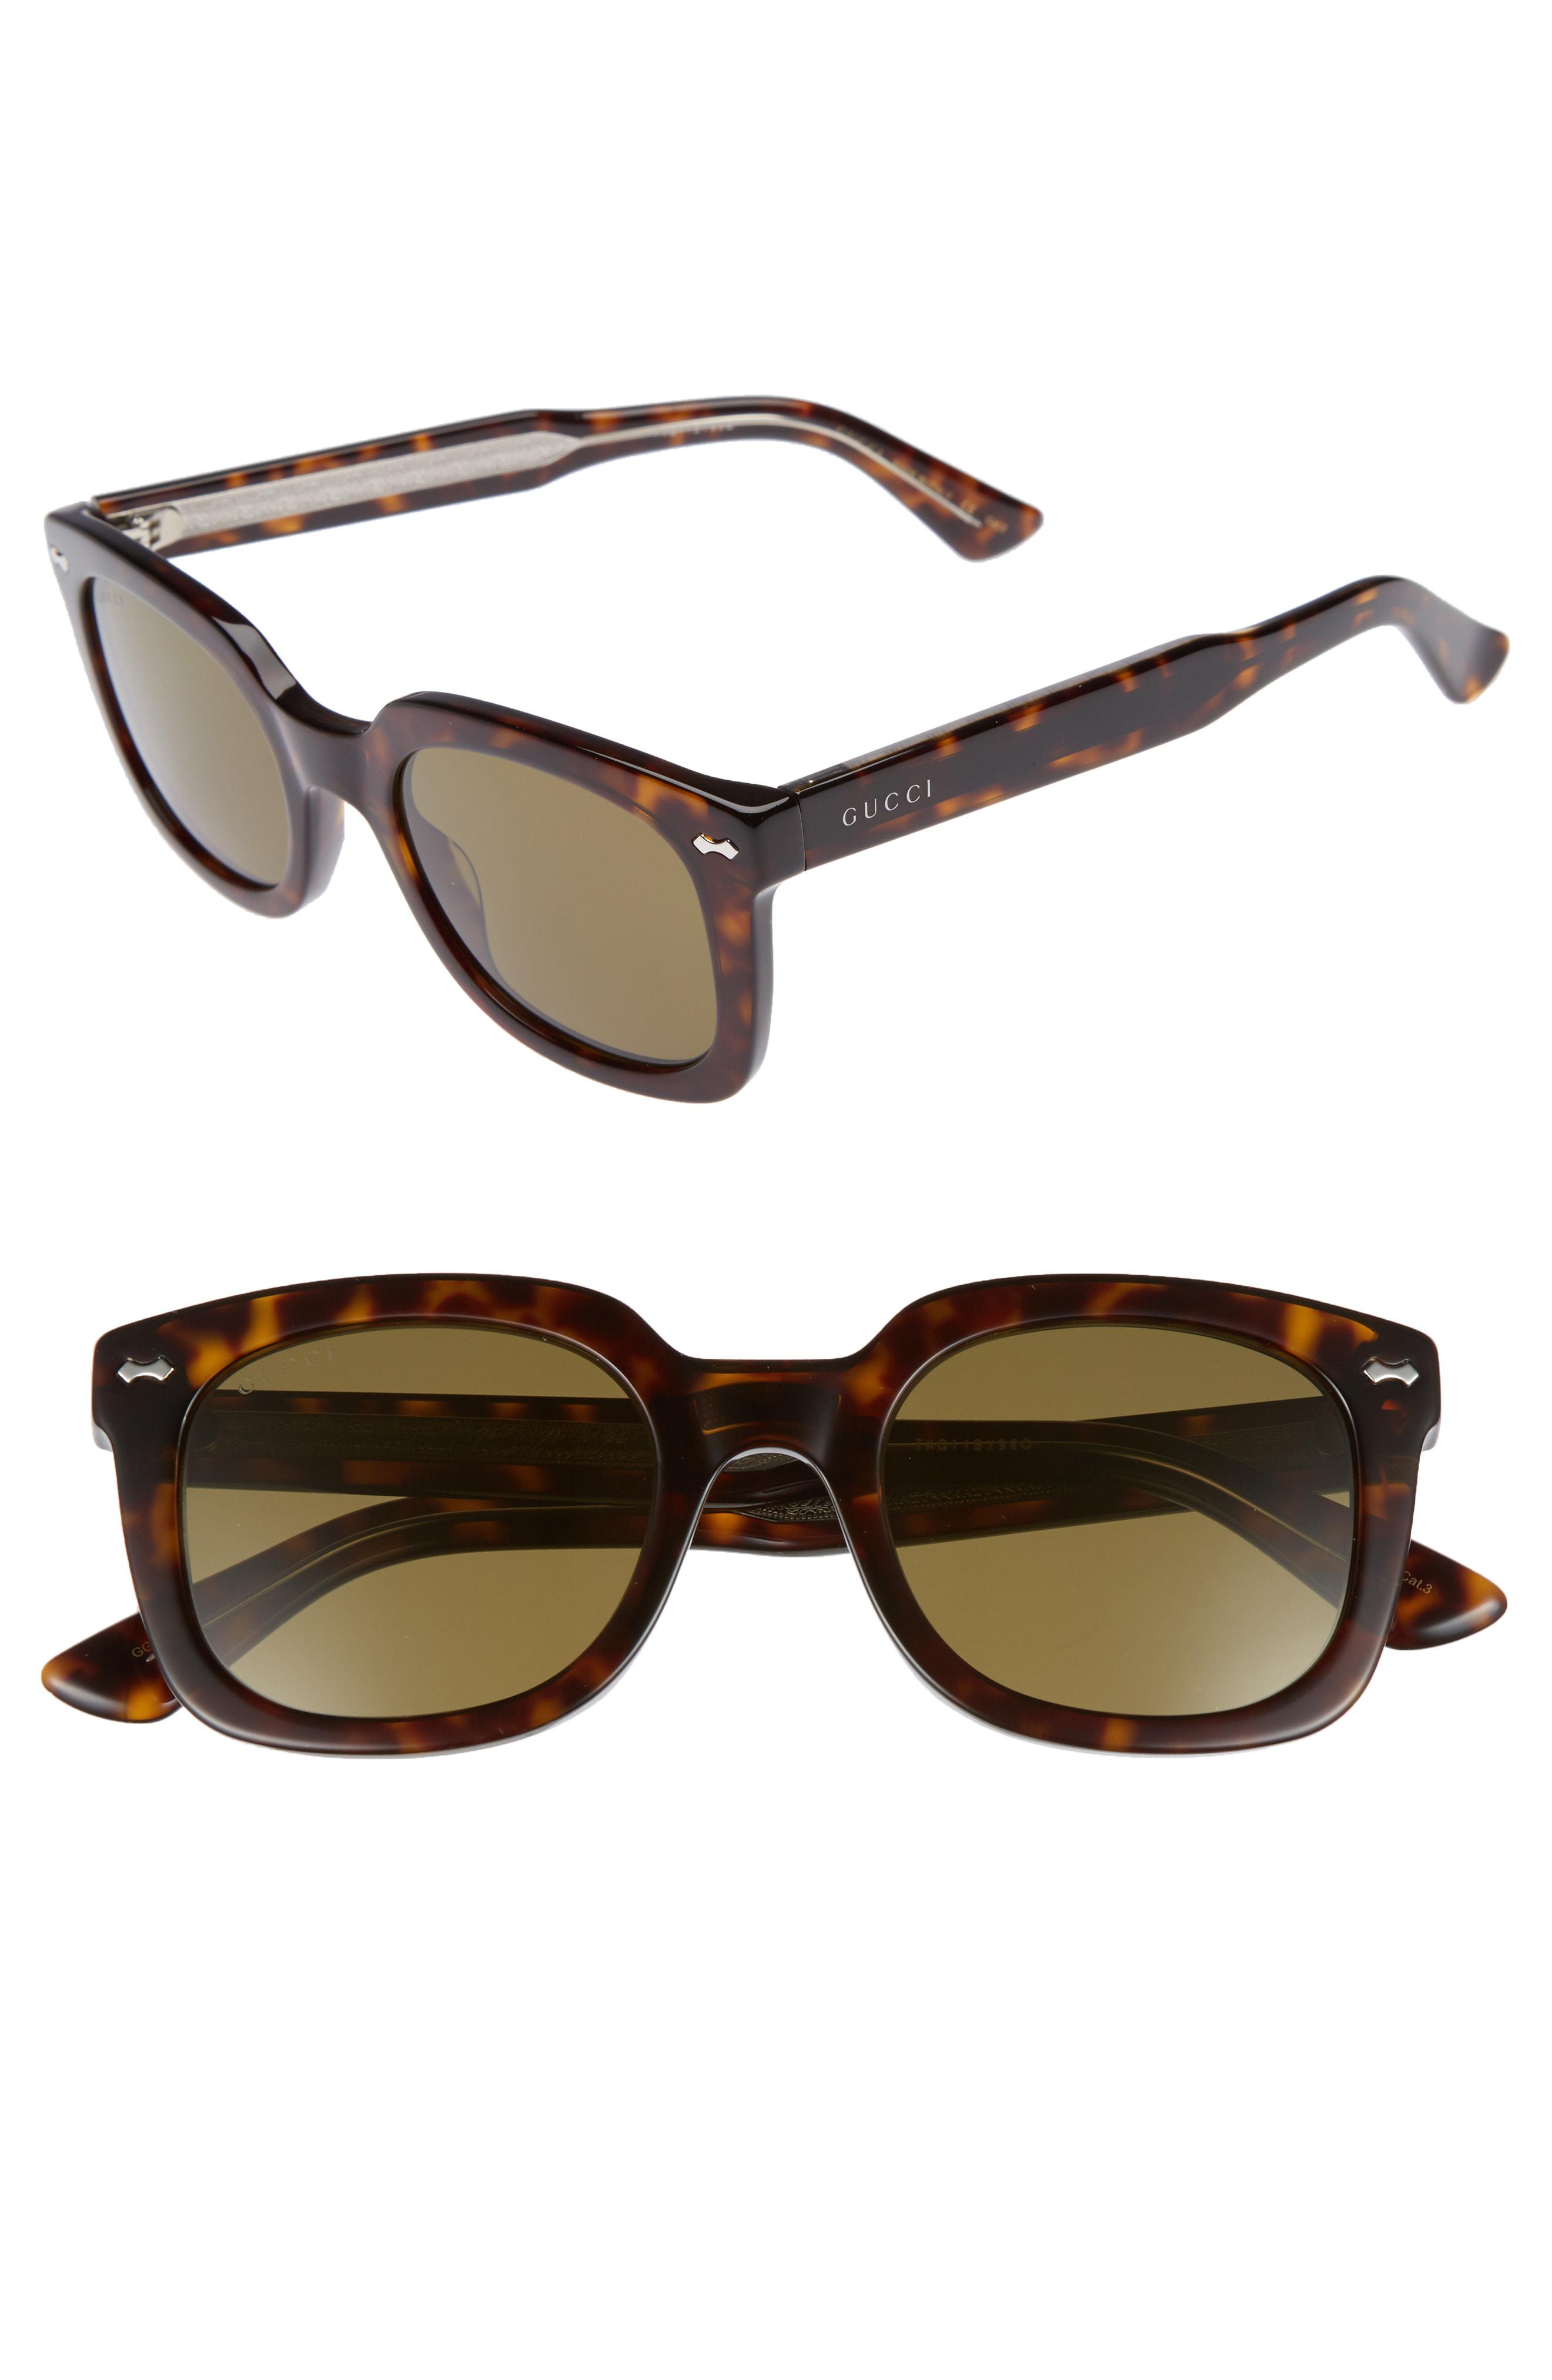 Gucci 50mm Square Sunglasses - Dark Havana in Brown for Men - Lyst